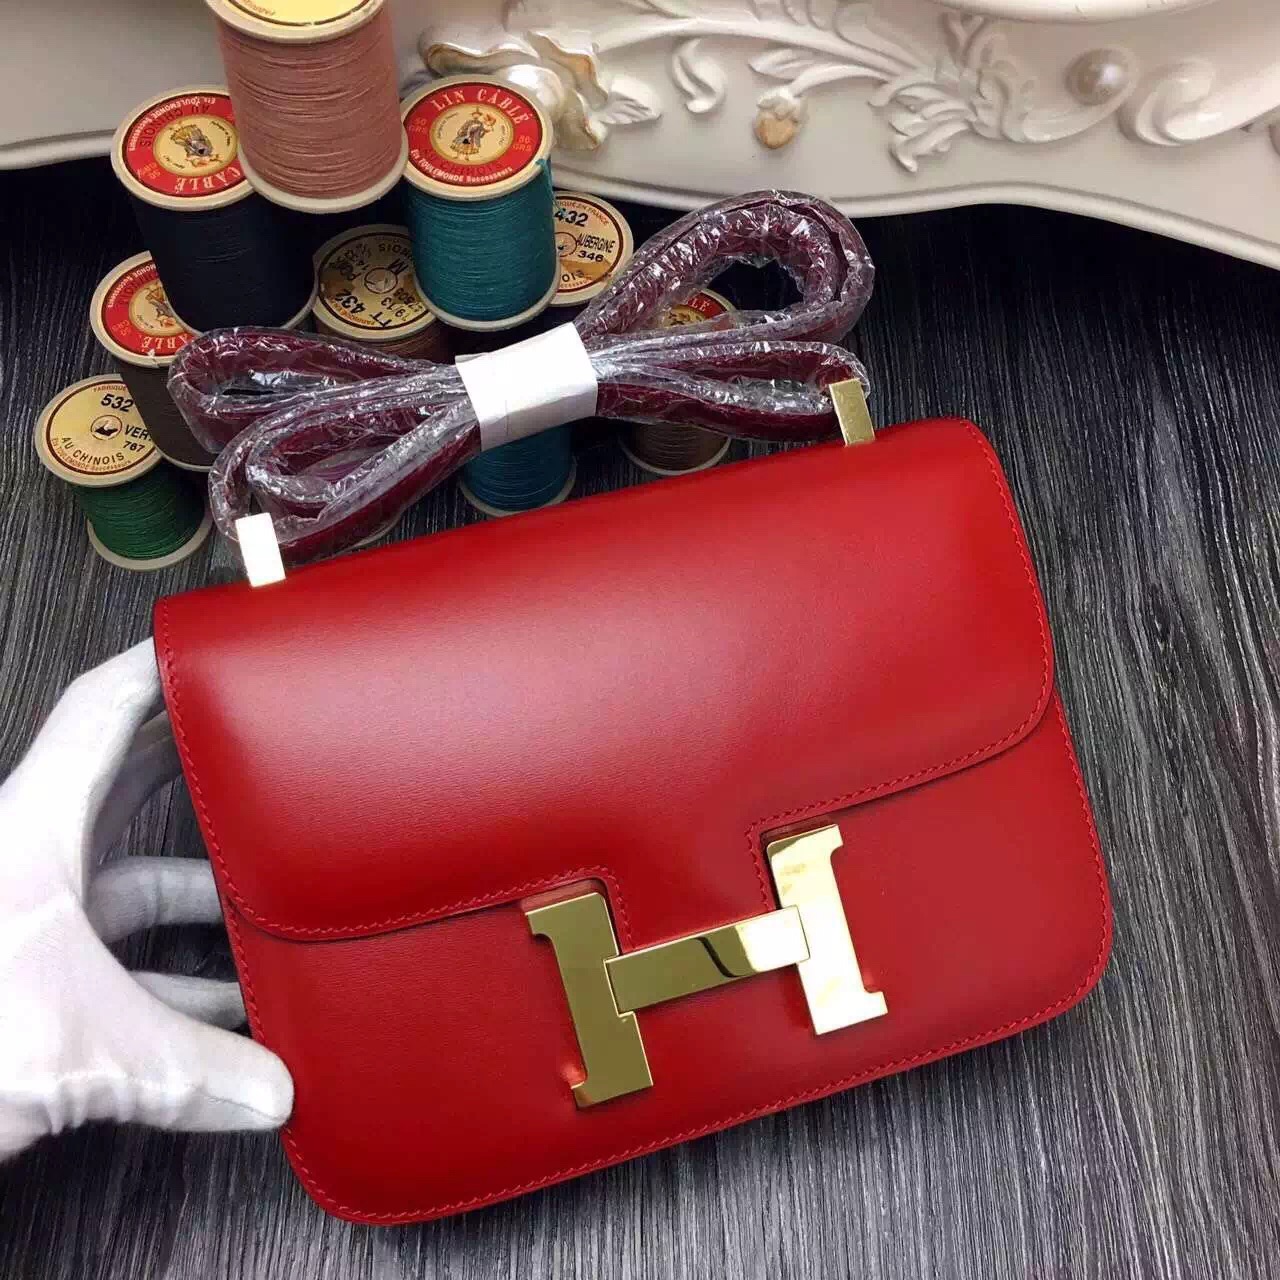 Hermes original box leather constance bag C023 red